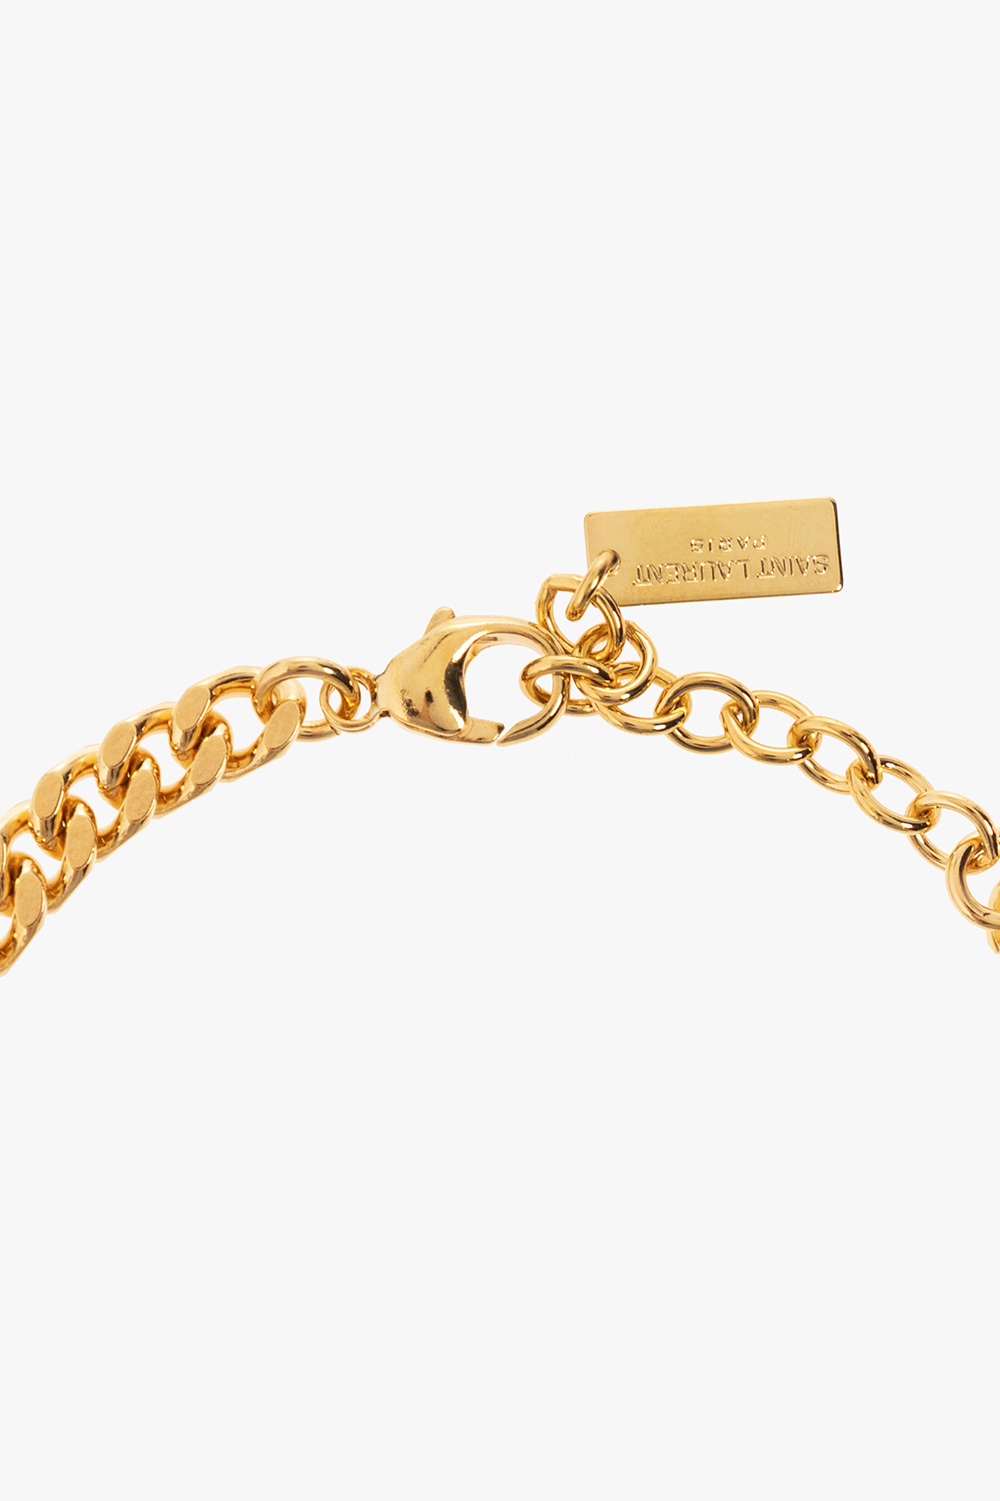 Saint Laurent glasses bracelet